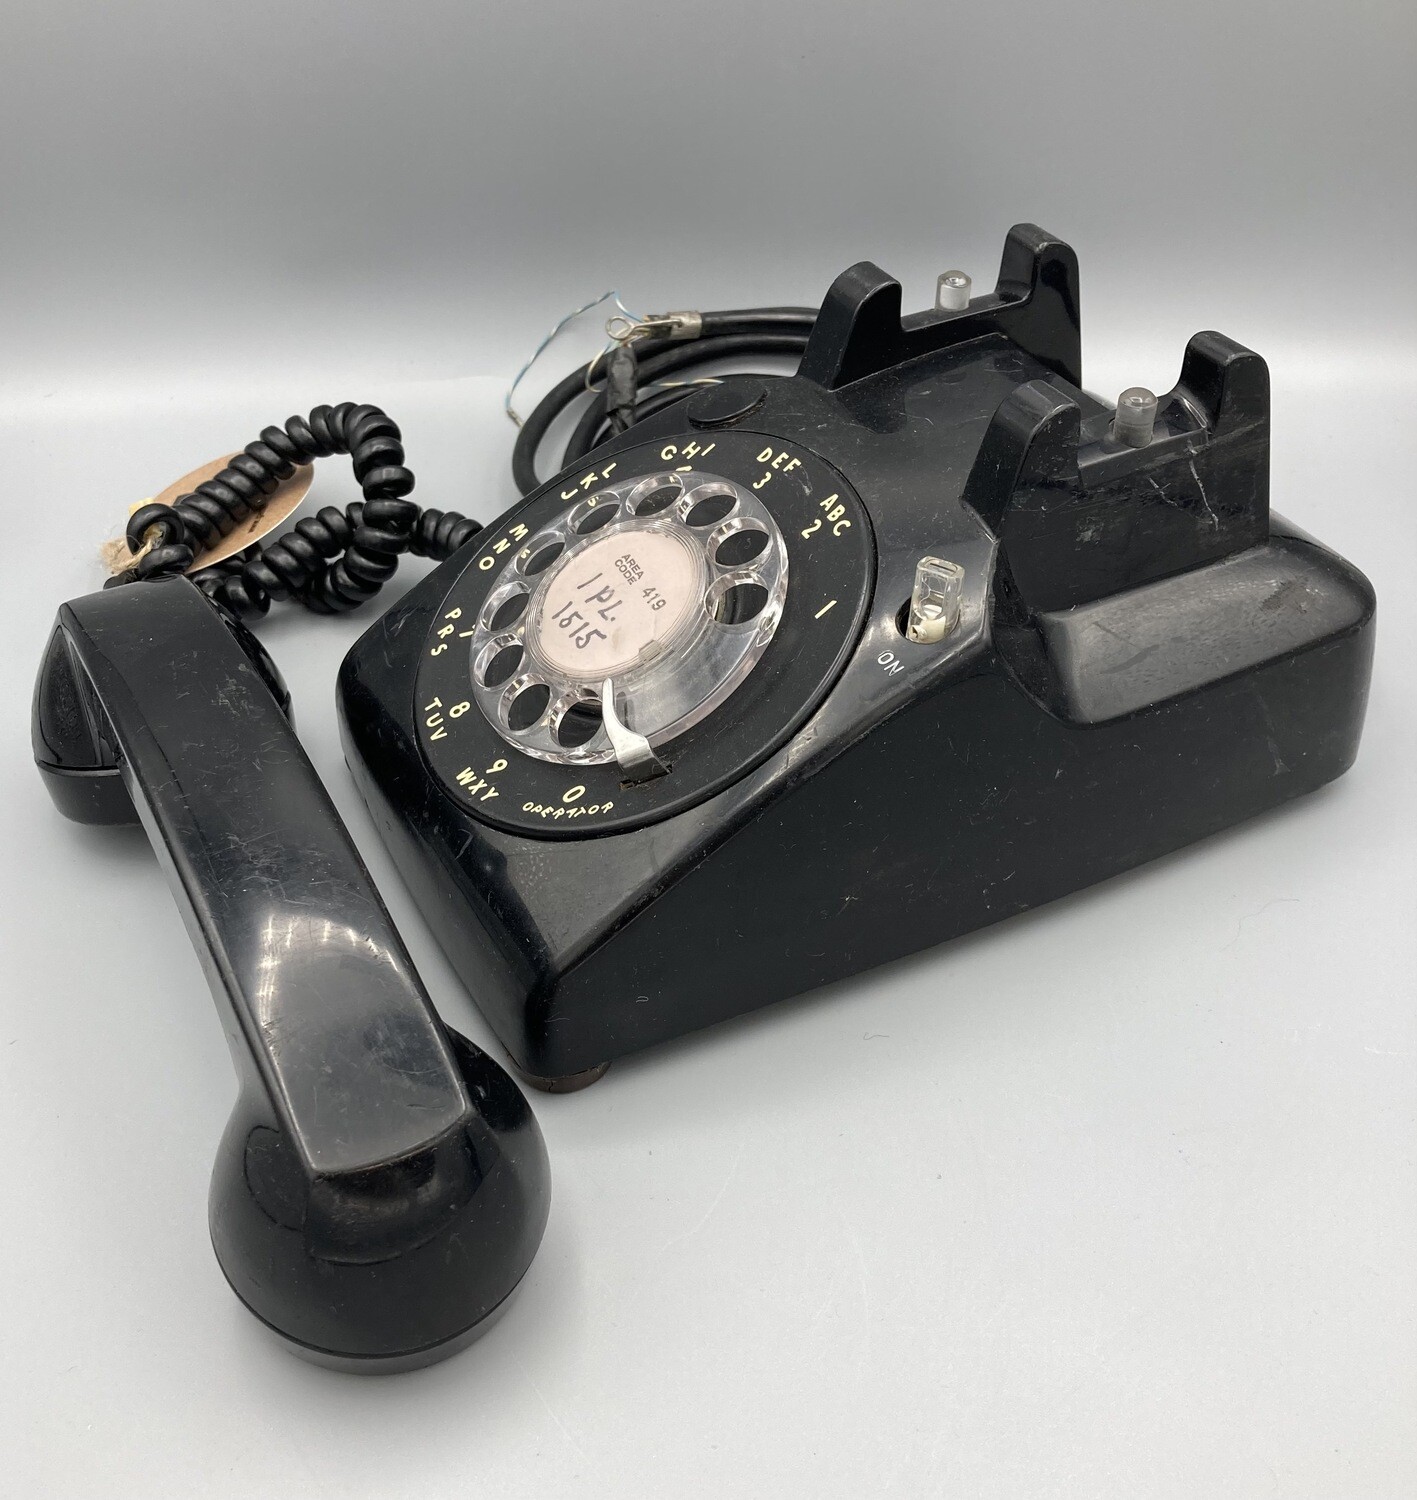 Western Electric Phone